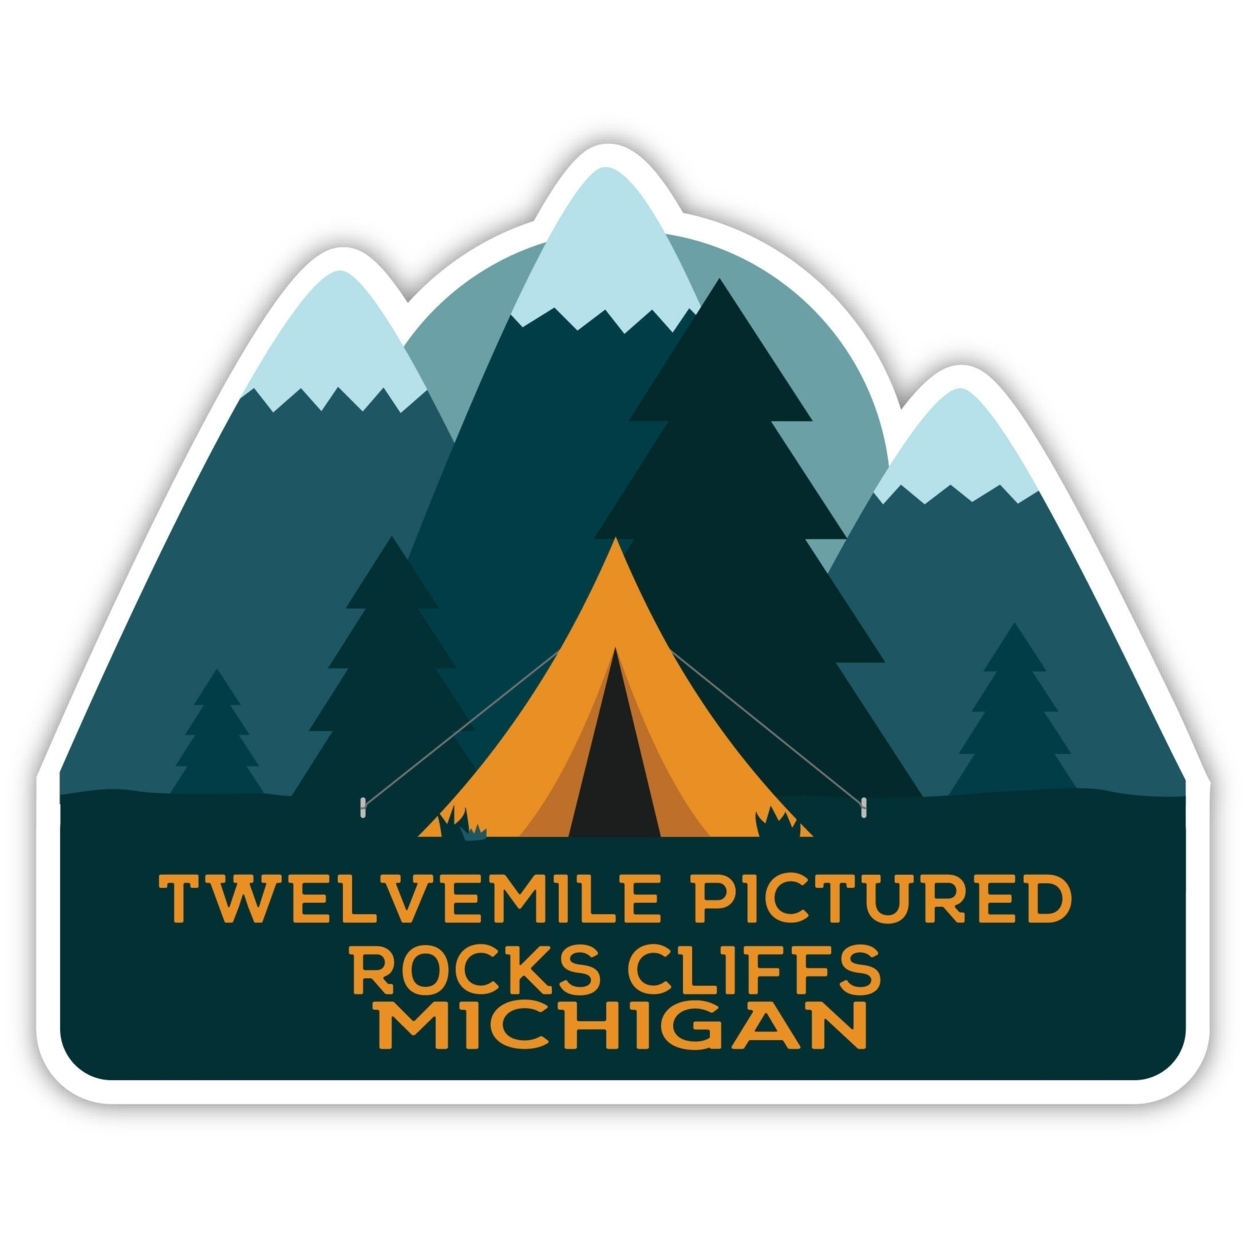 Twelvemile Pictured Rocks Cliffs Michigan Souvenir Decorative Stickers (Choose Theme And Size) - Single Unit, 2-Inch, Tent